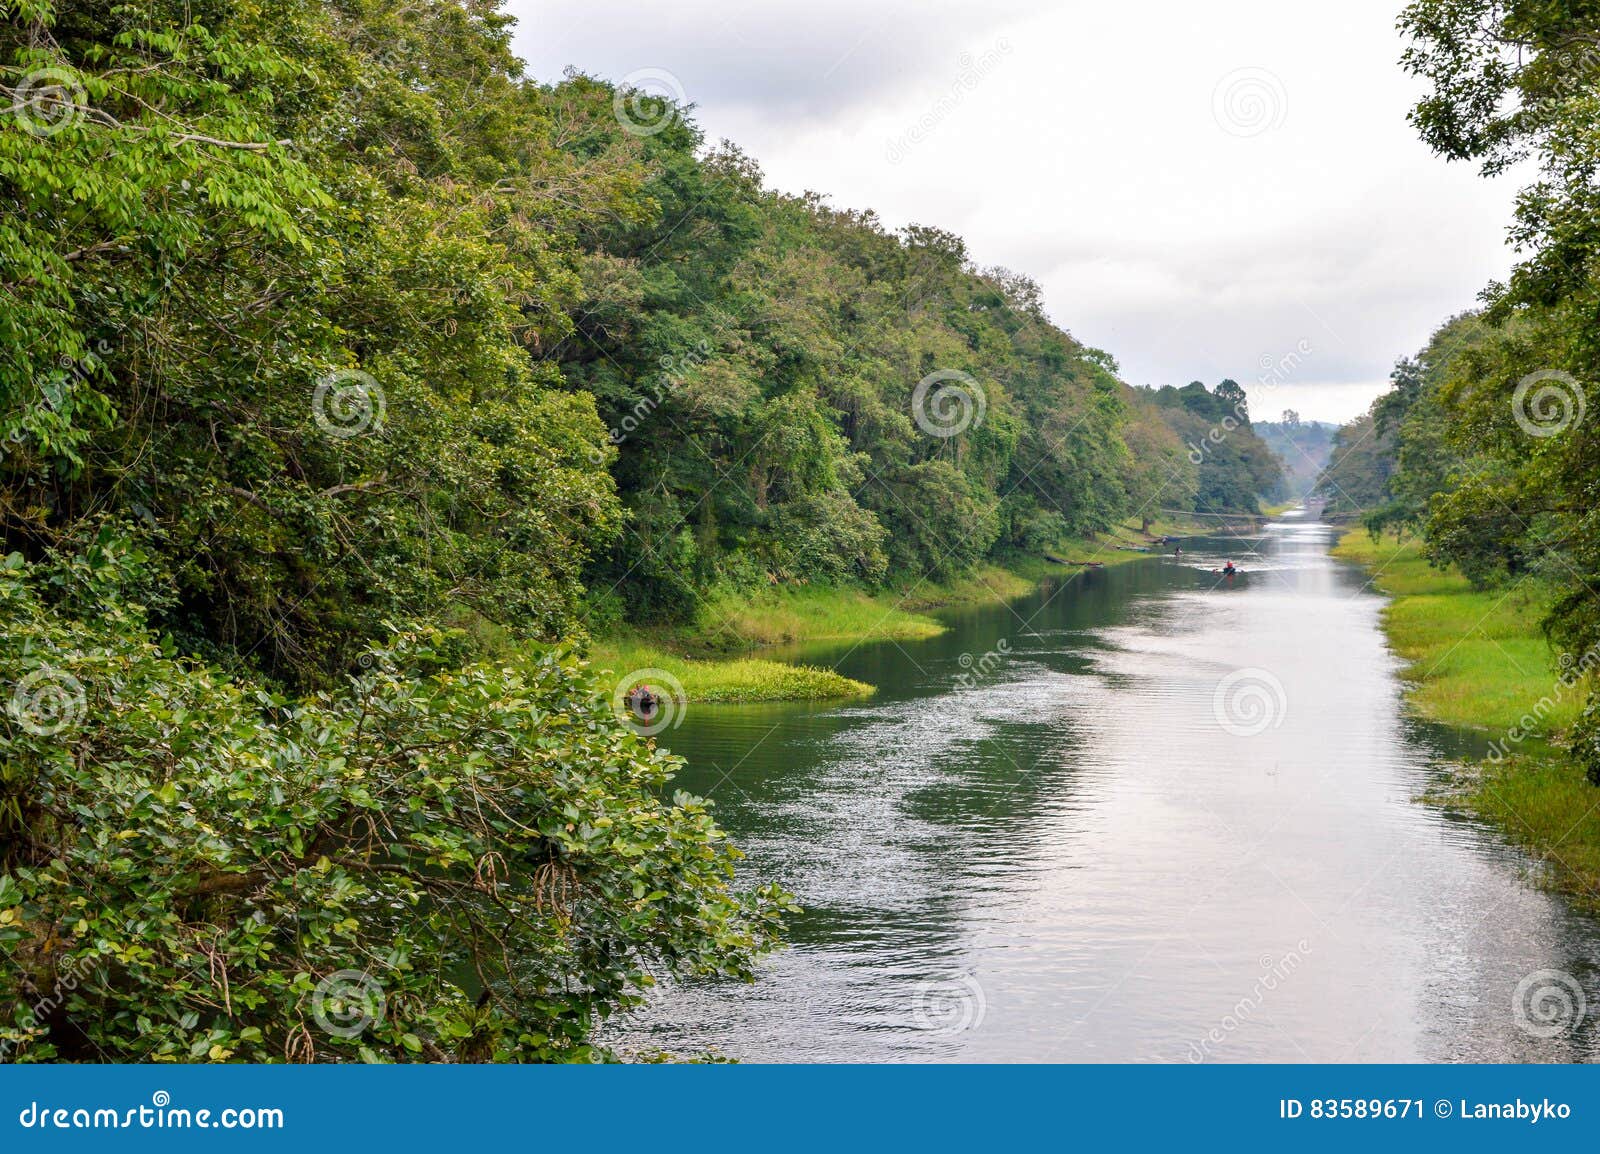 river through los naranjos national park by lake de yojoa, honduras